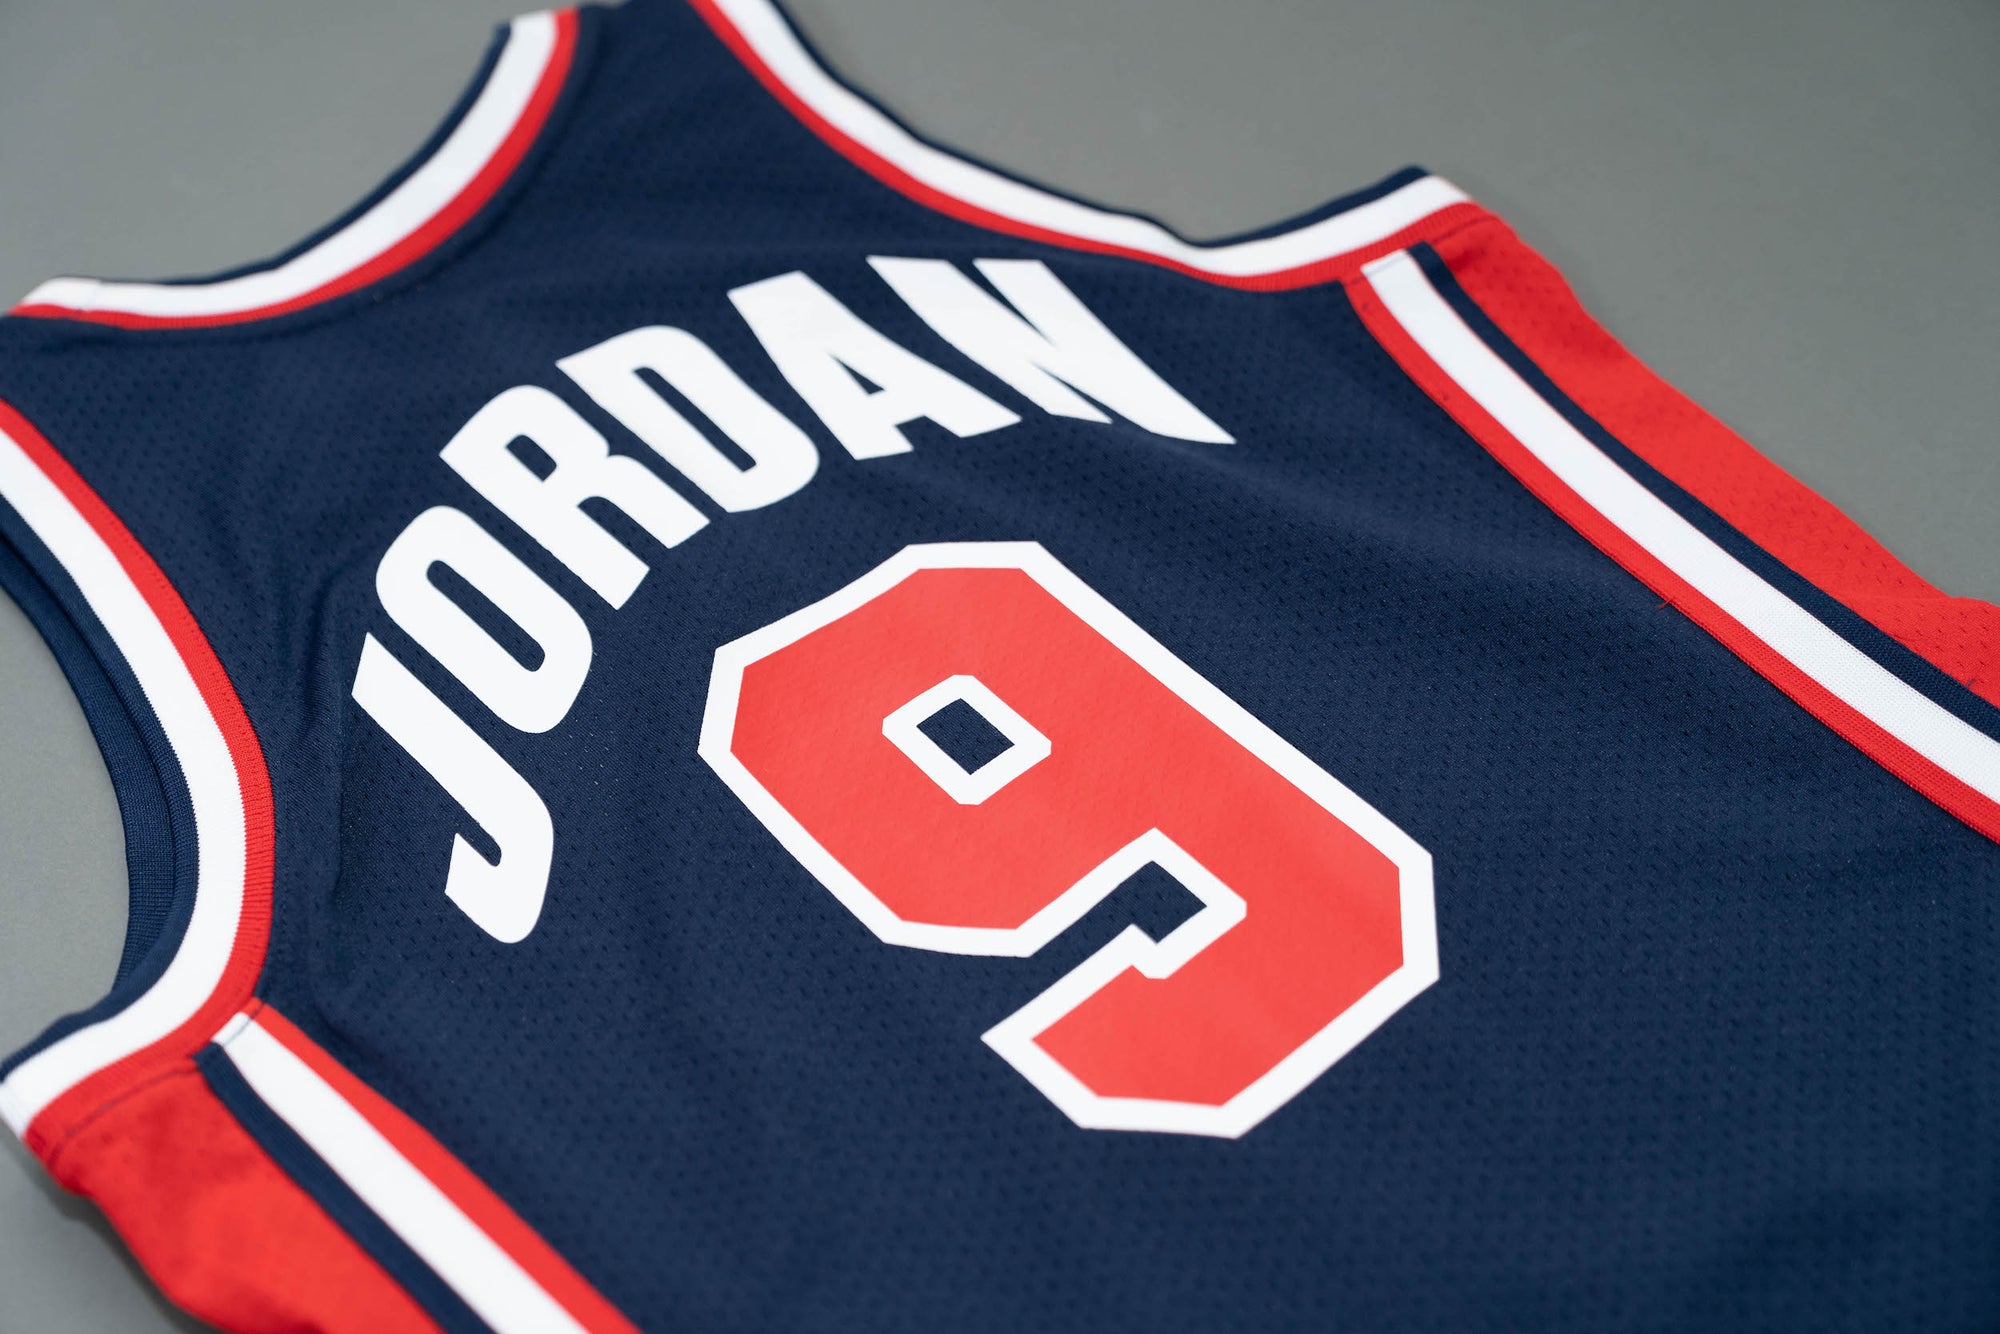 Nike USA Michael Jordan Team USA Dream team jersey retro